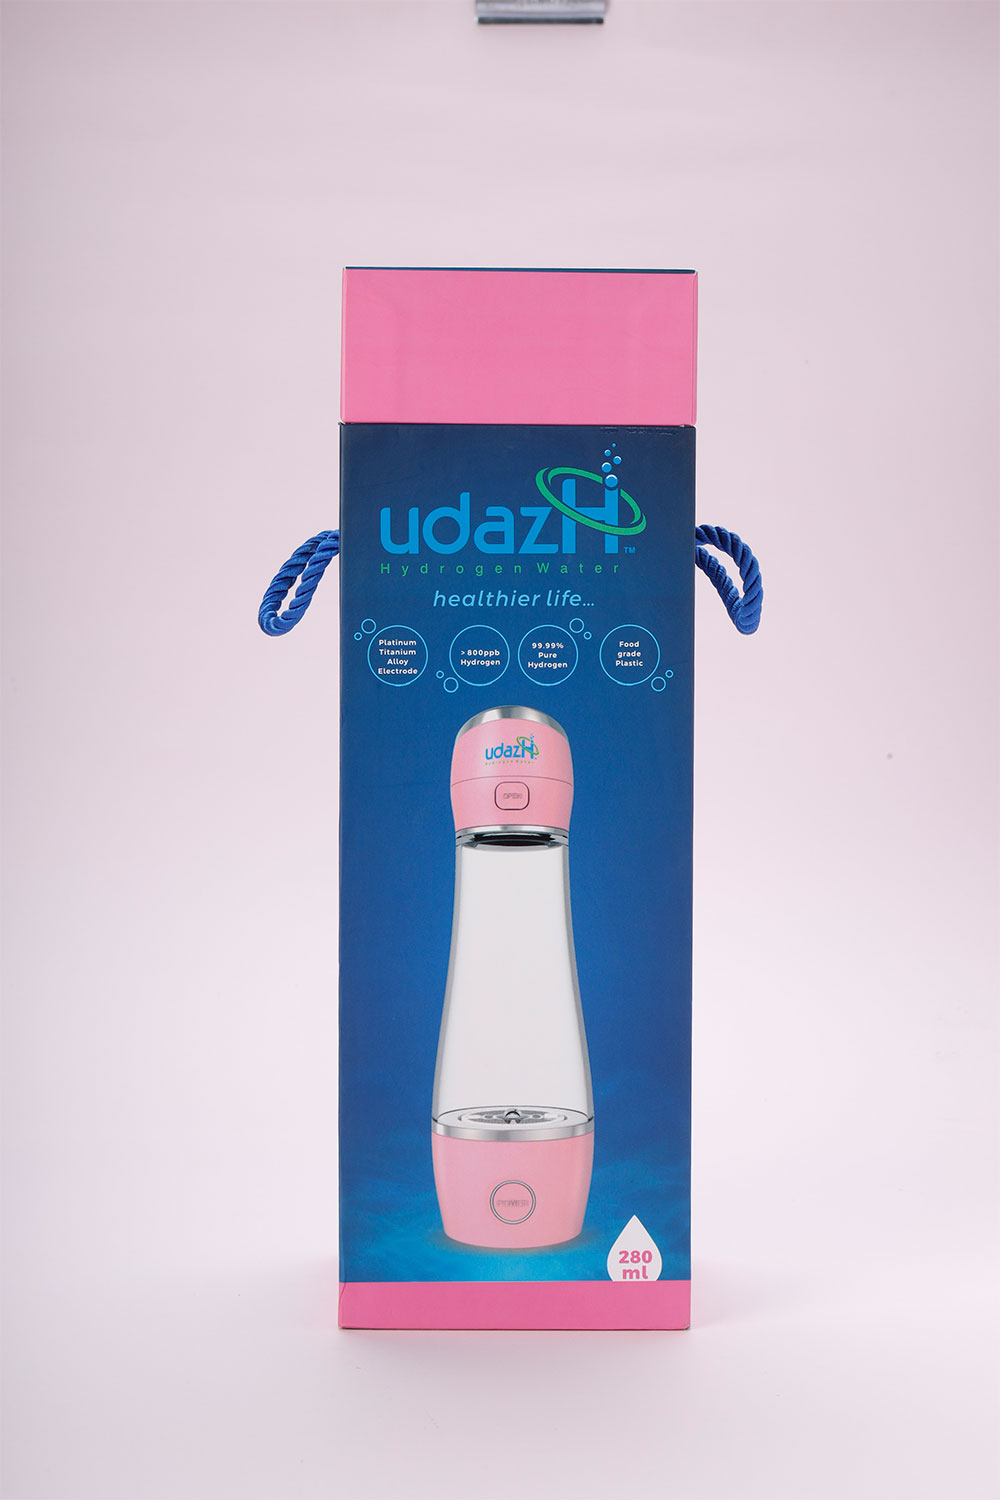 Udazh Hydrogen water bottle Online in India